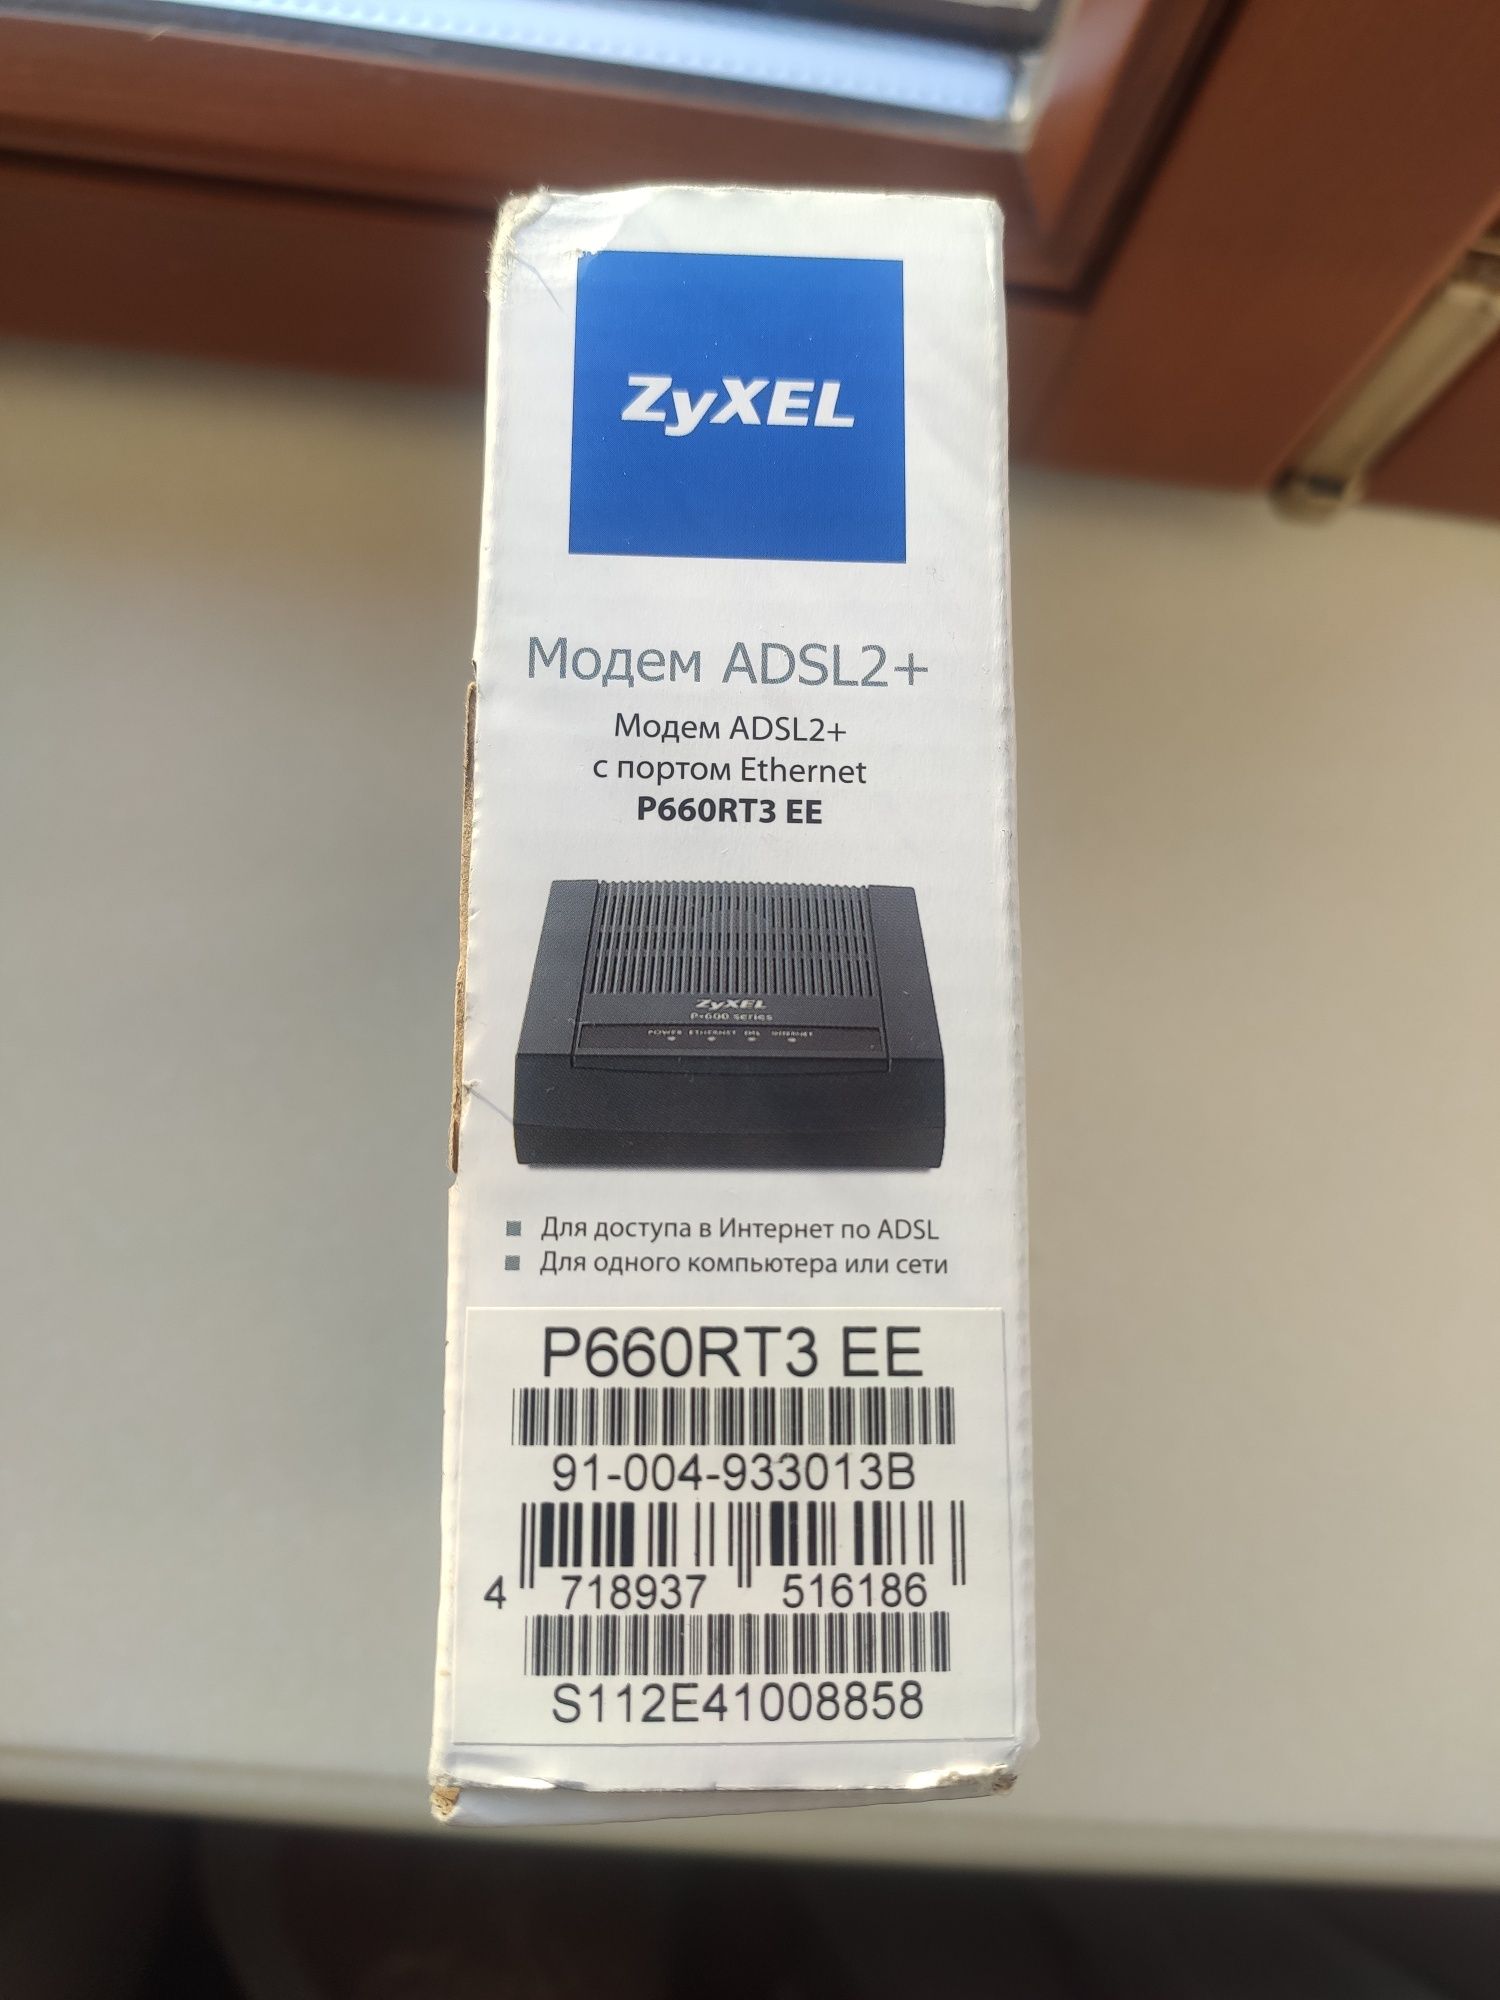 ZyXEL P-660RT3 - ADSL2+ с портом Ethernet